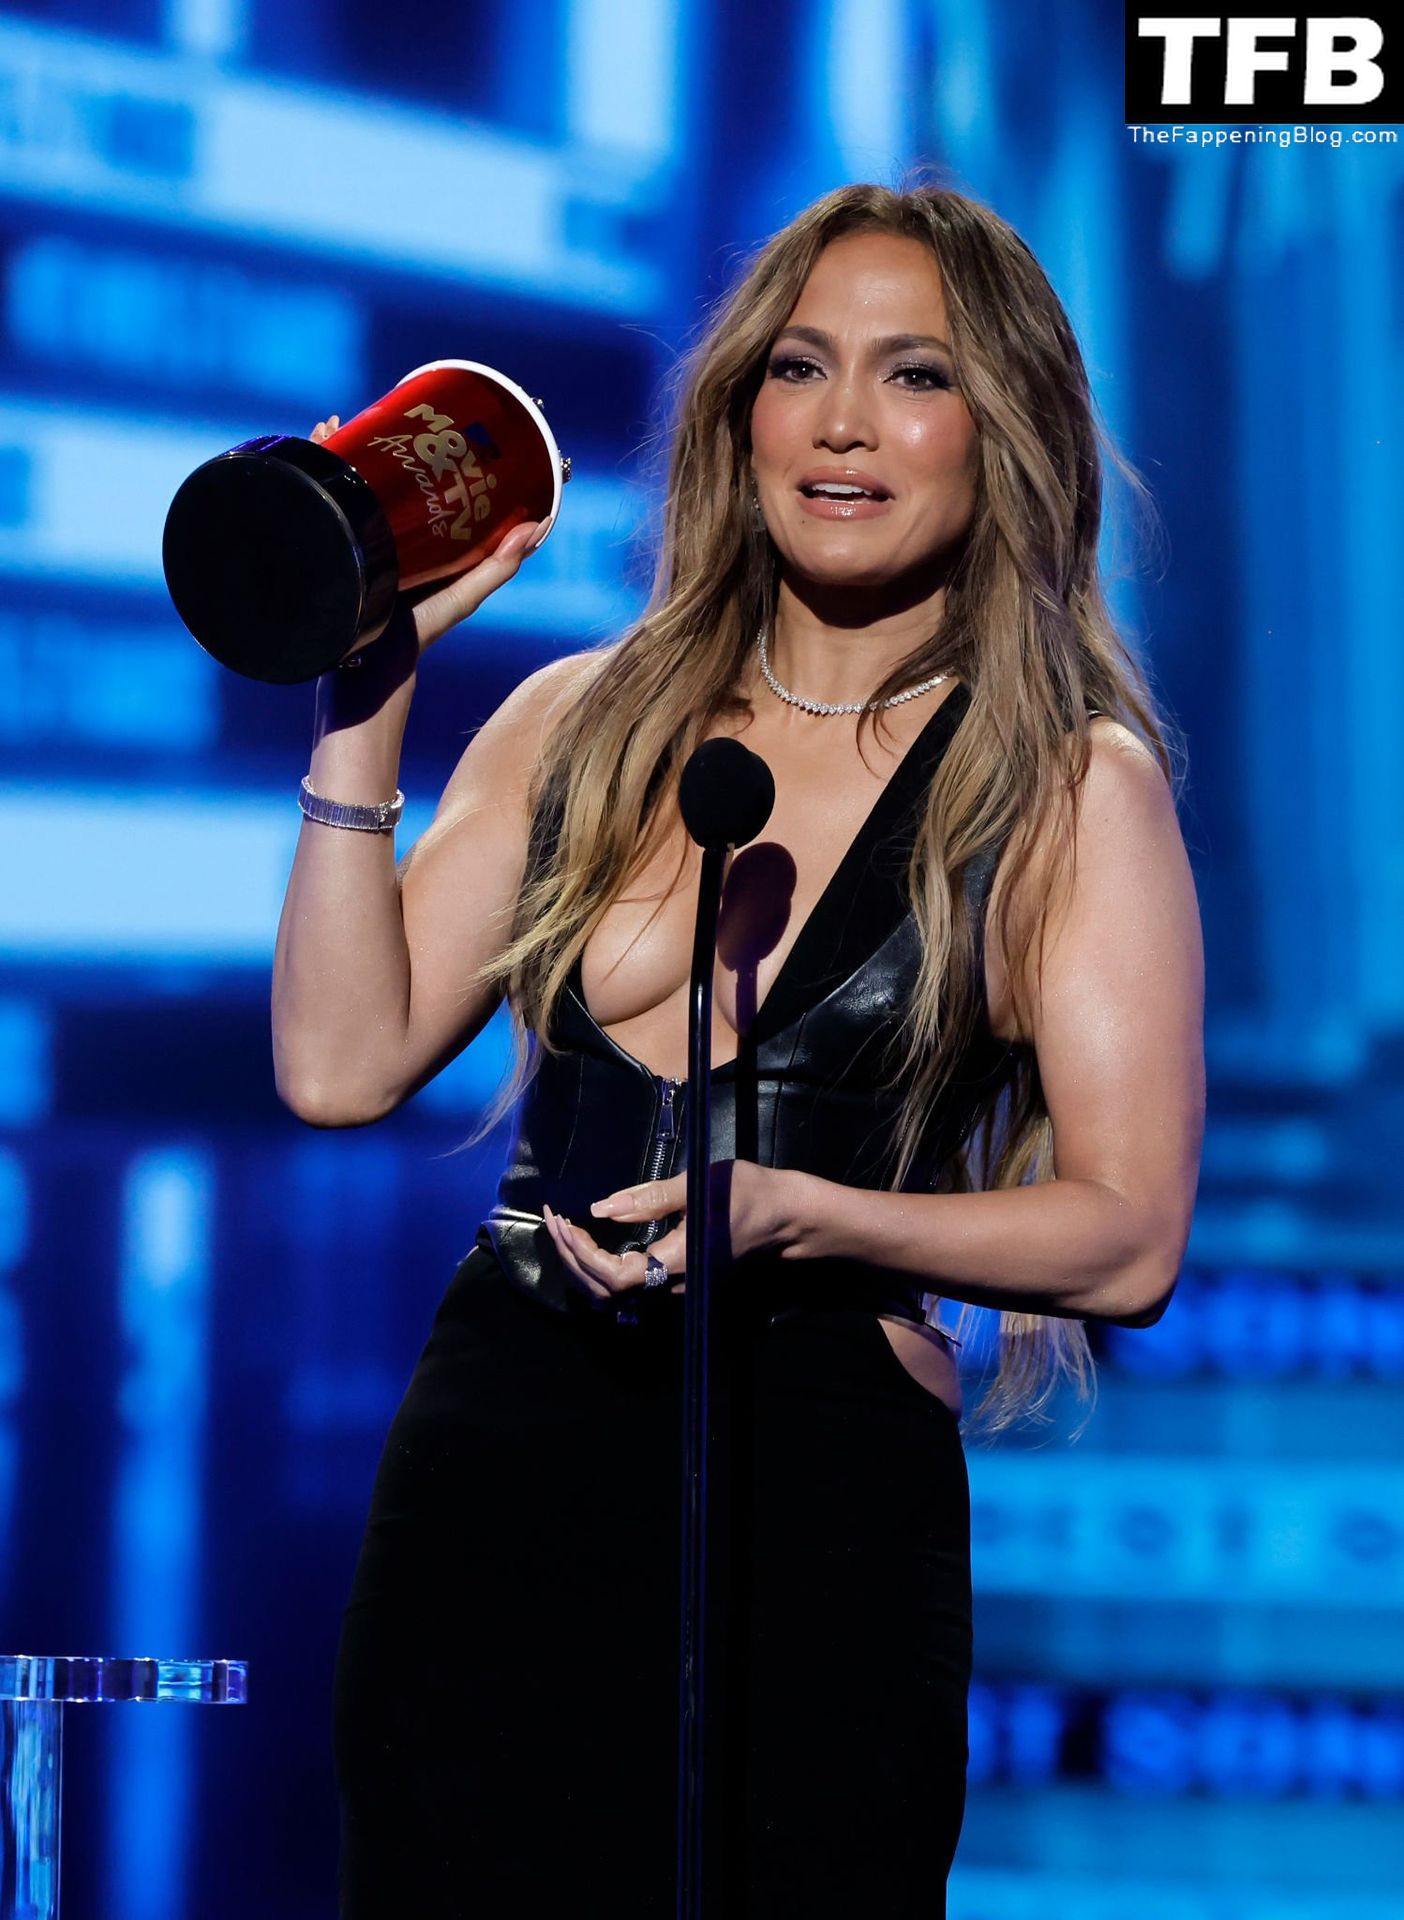 Jennifer-Lopez-Sexy-The-Fappening-Blog-57.jpg